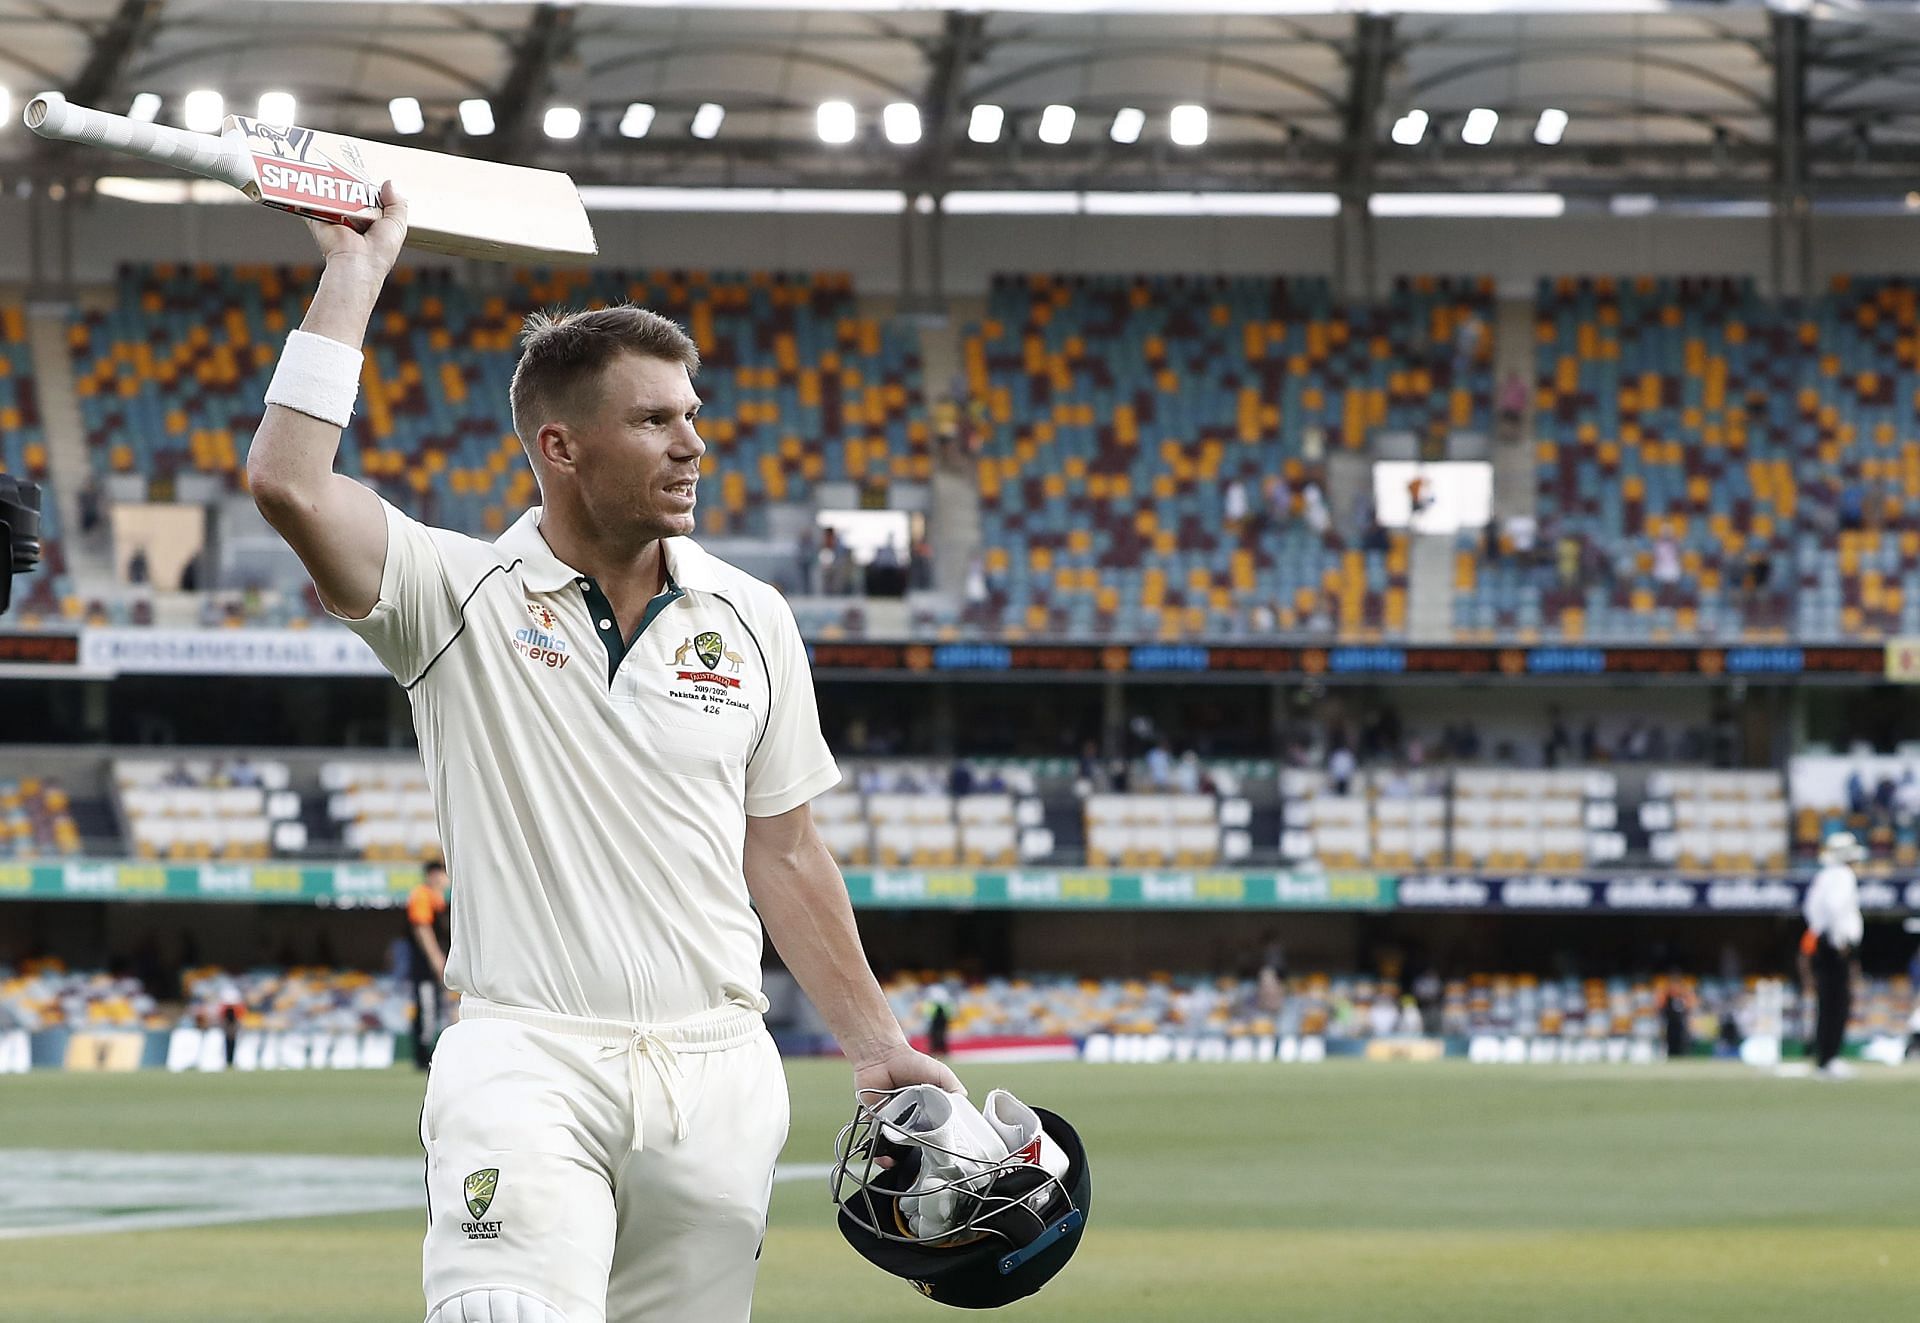 David Warner scored 26 tons in Test cricket (Image via Getty Images)